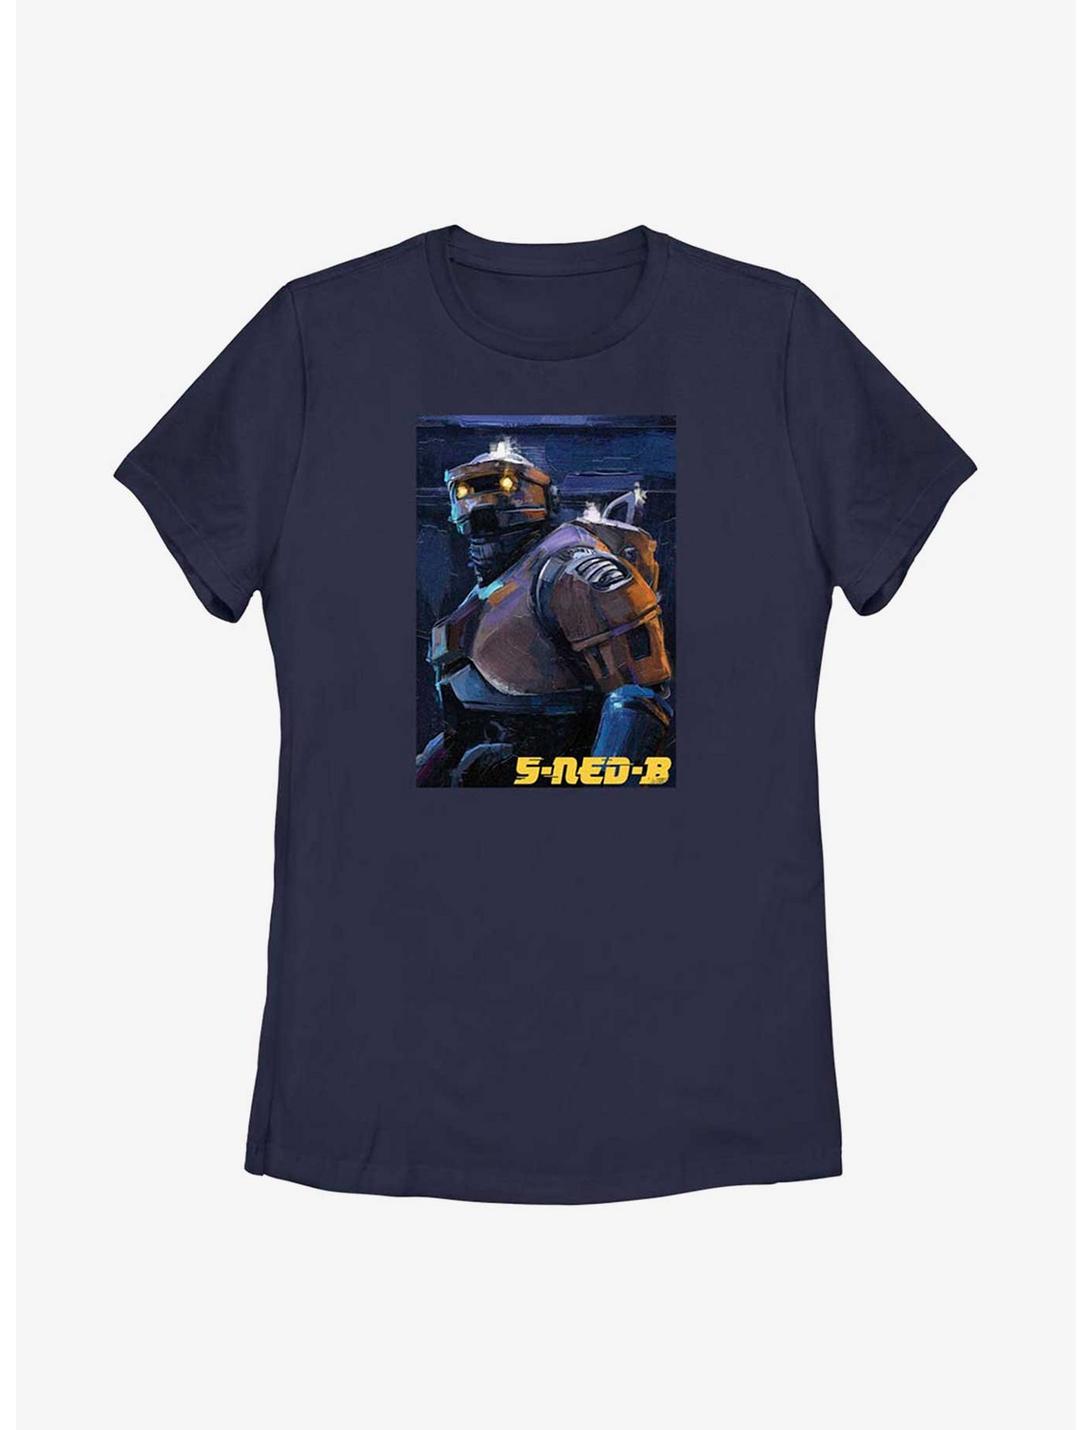 Star Wars Obi-Wan Kenobi 5-NED-B Painting Womens T-Shirt, NAVY, hi-res